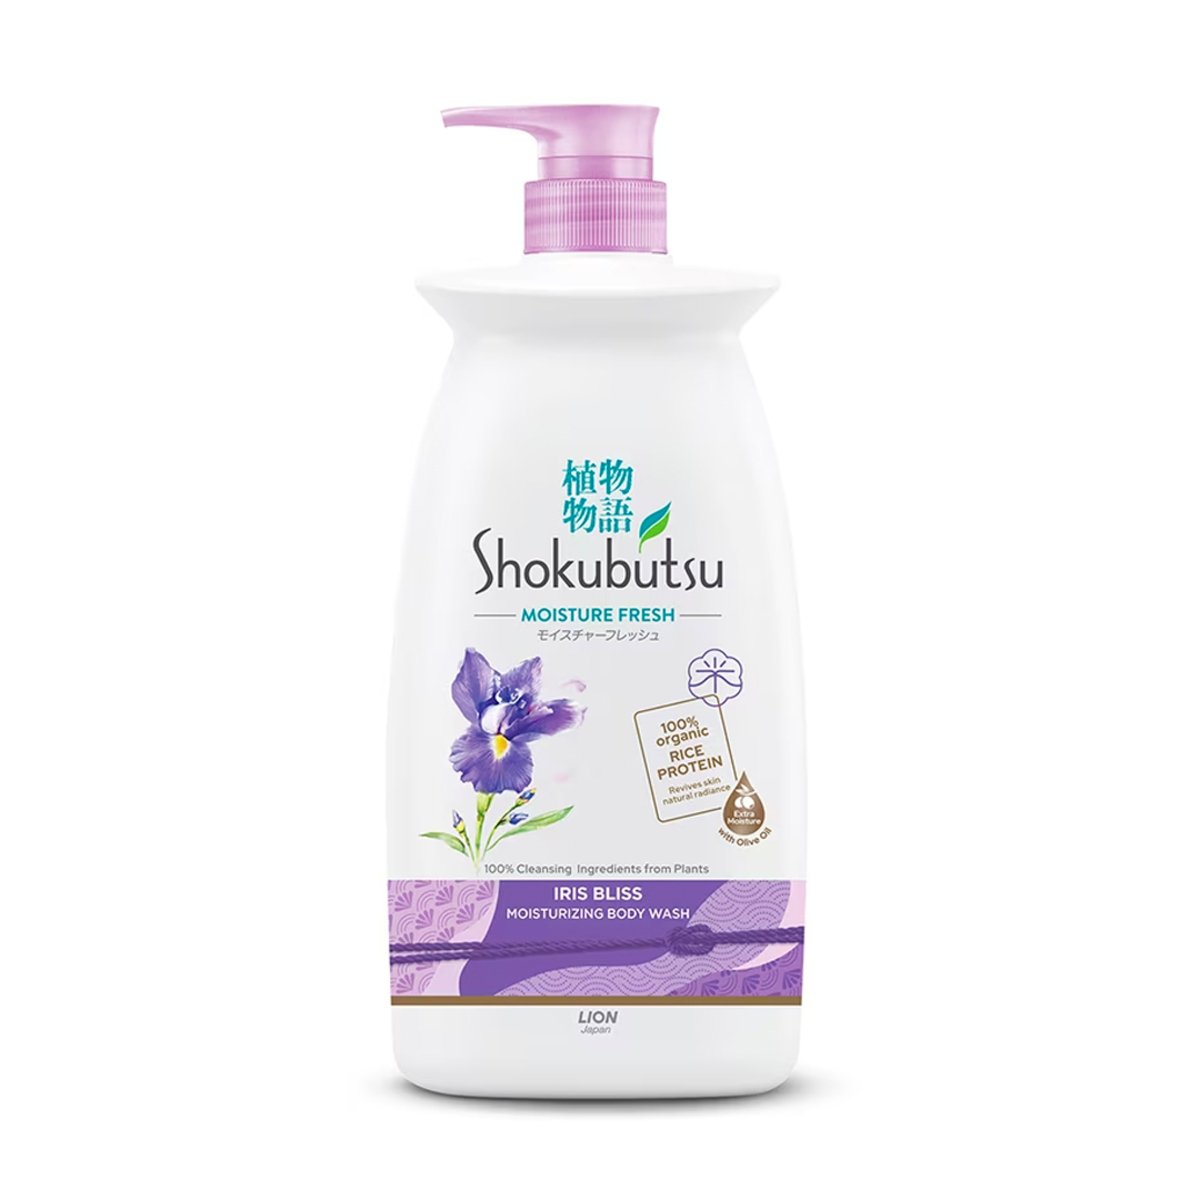 Shokubutsu Moisturizing Body Wash Iris Bliss 900g